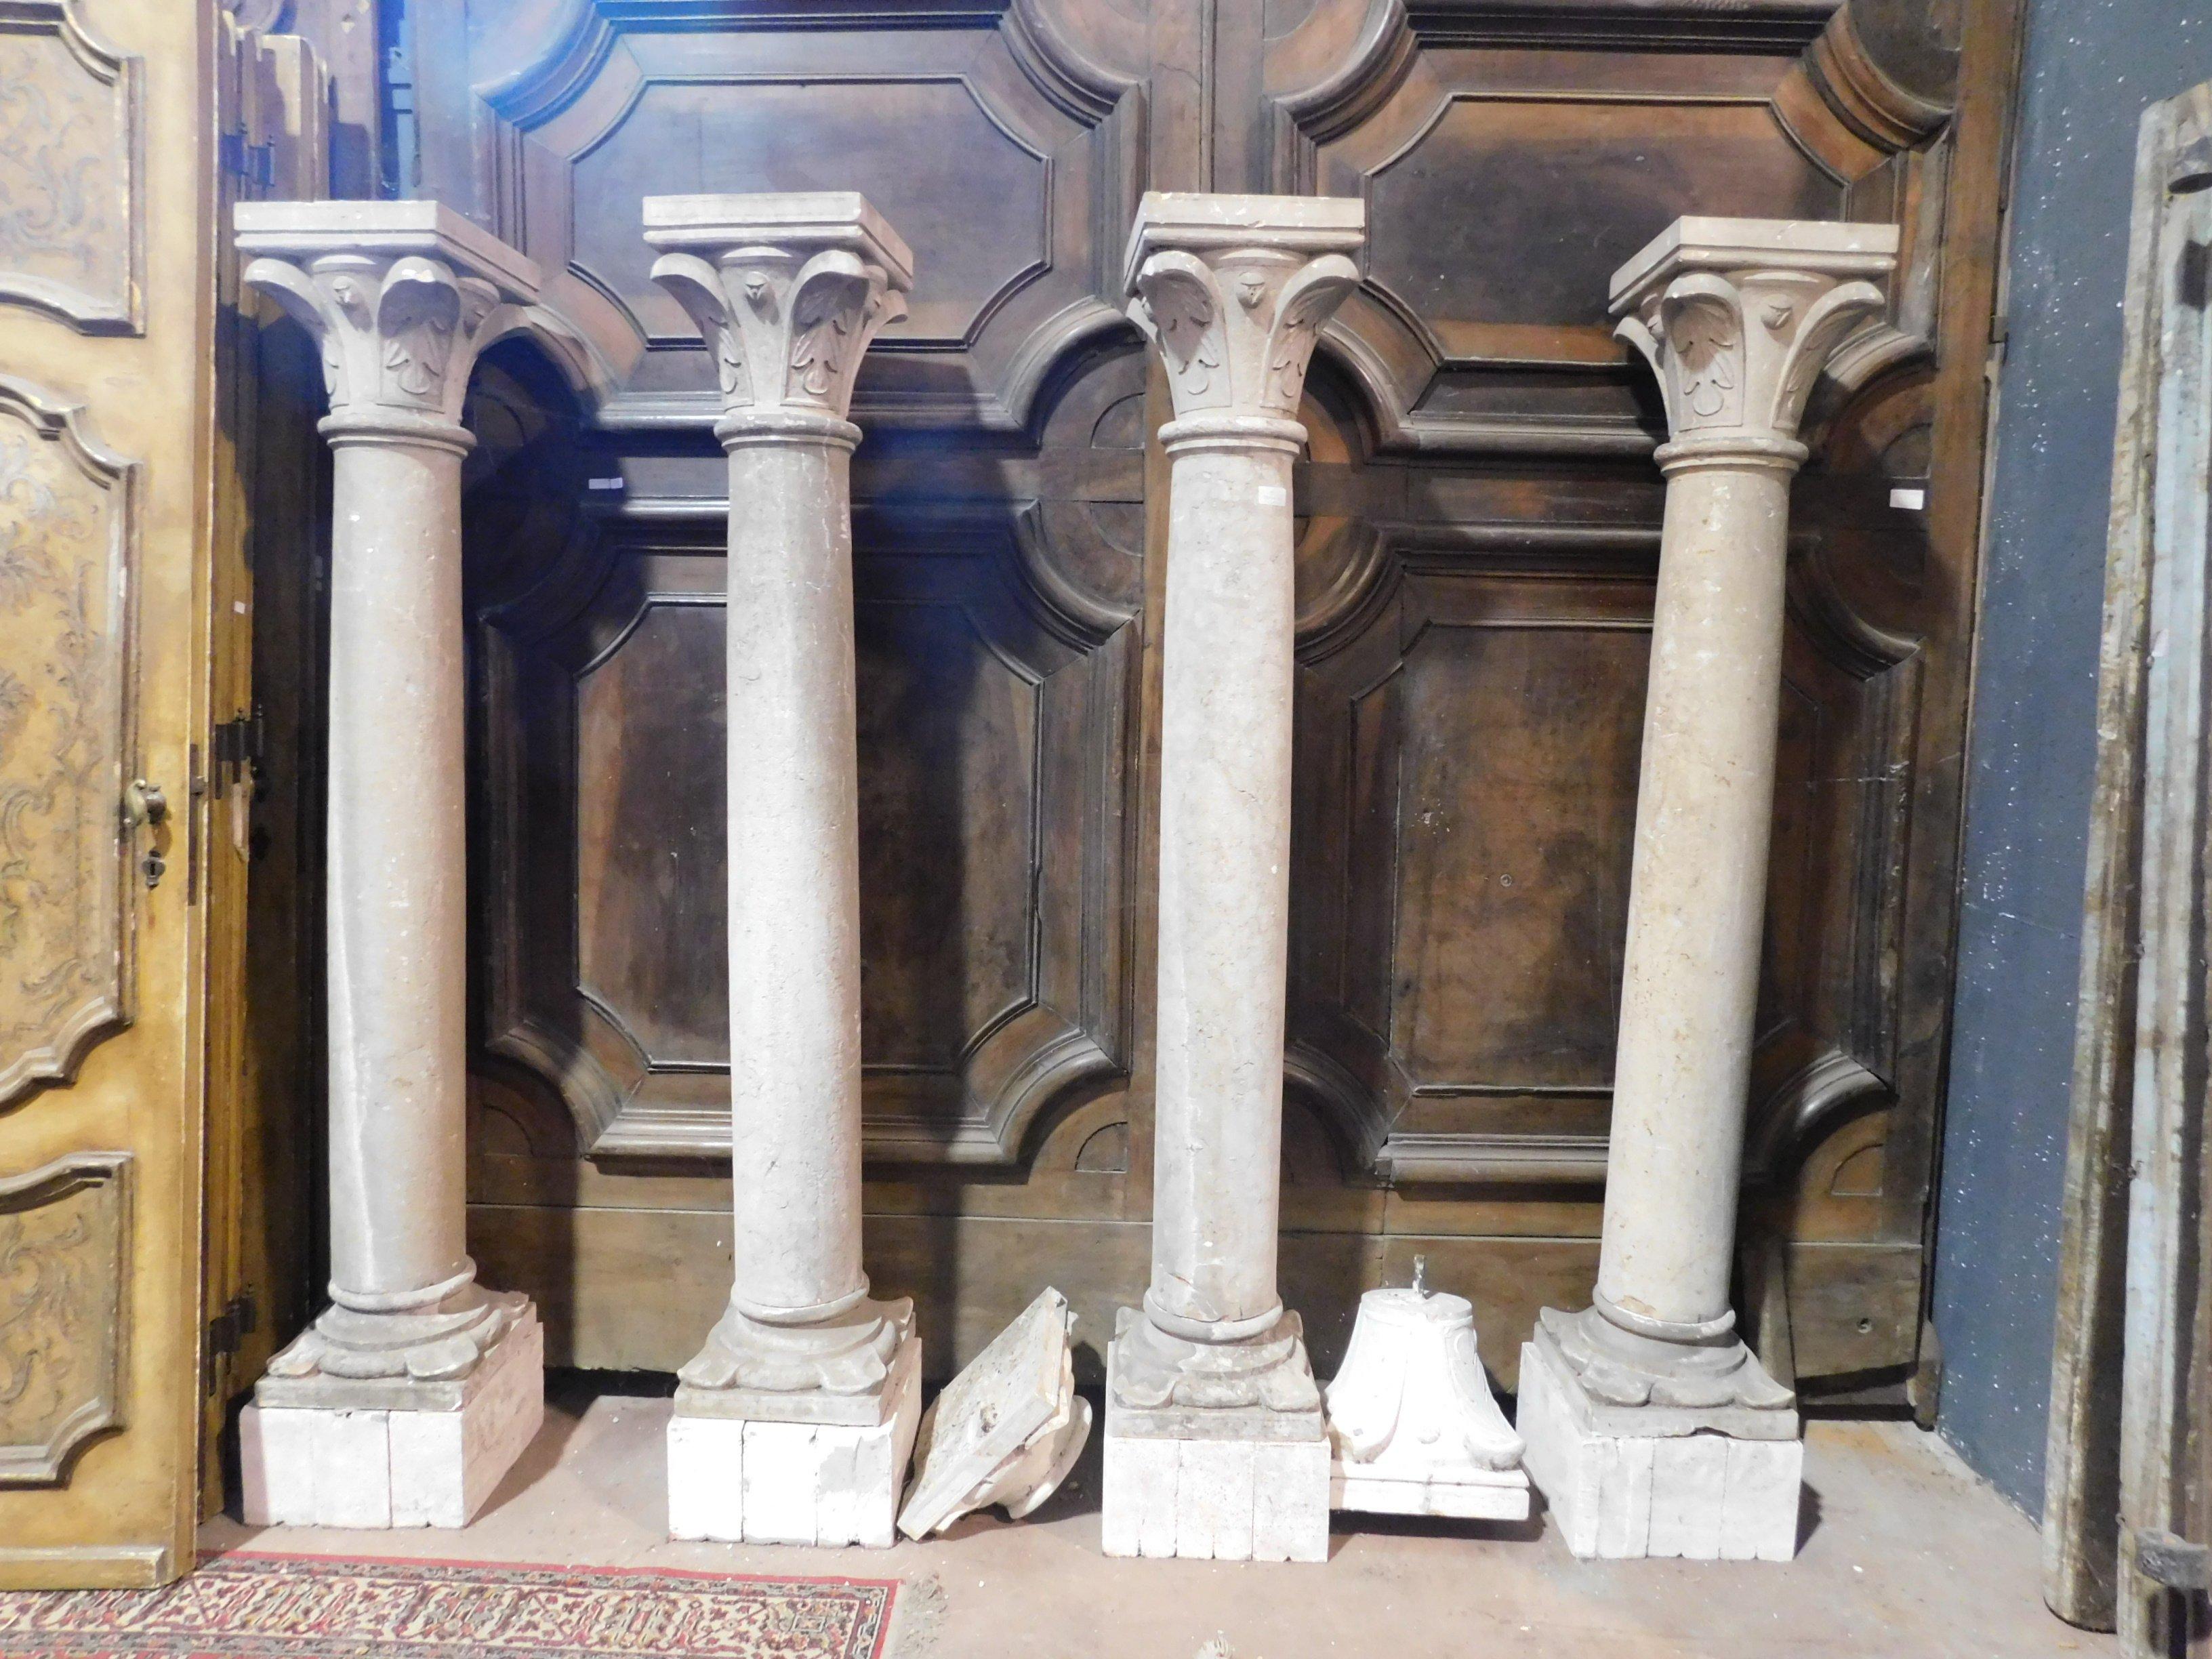 sculpted columns